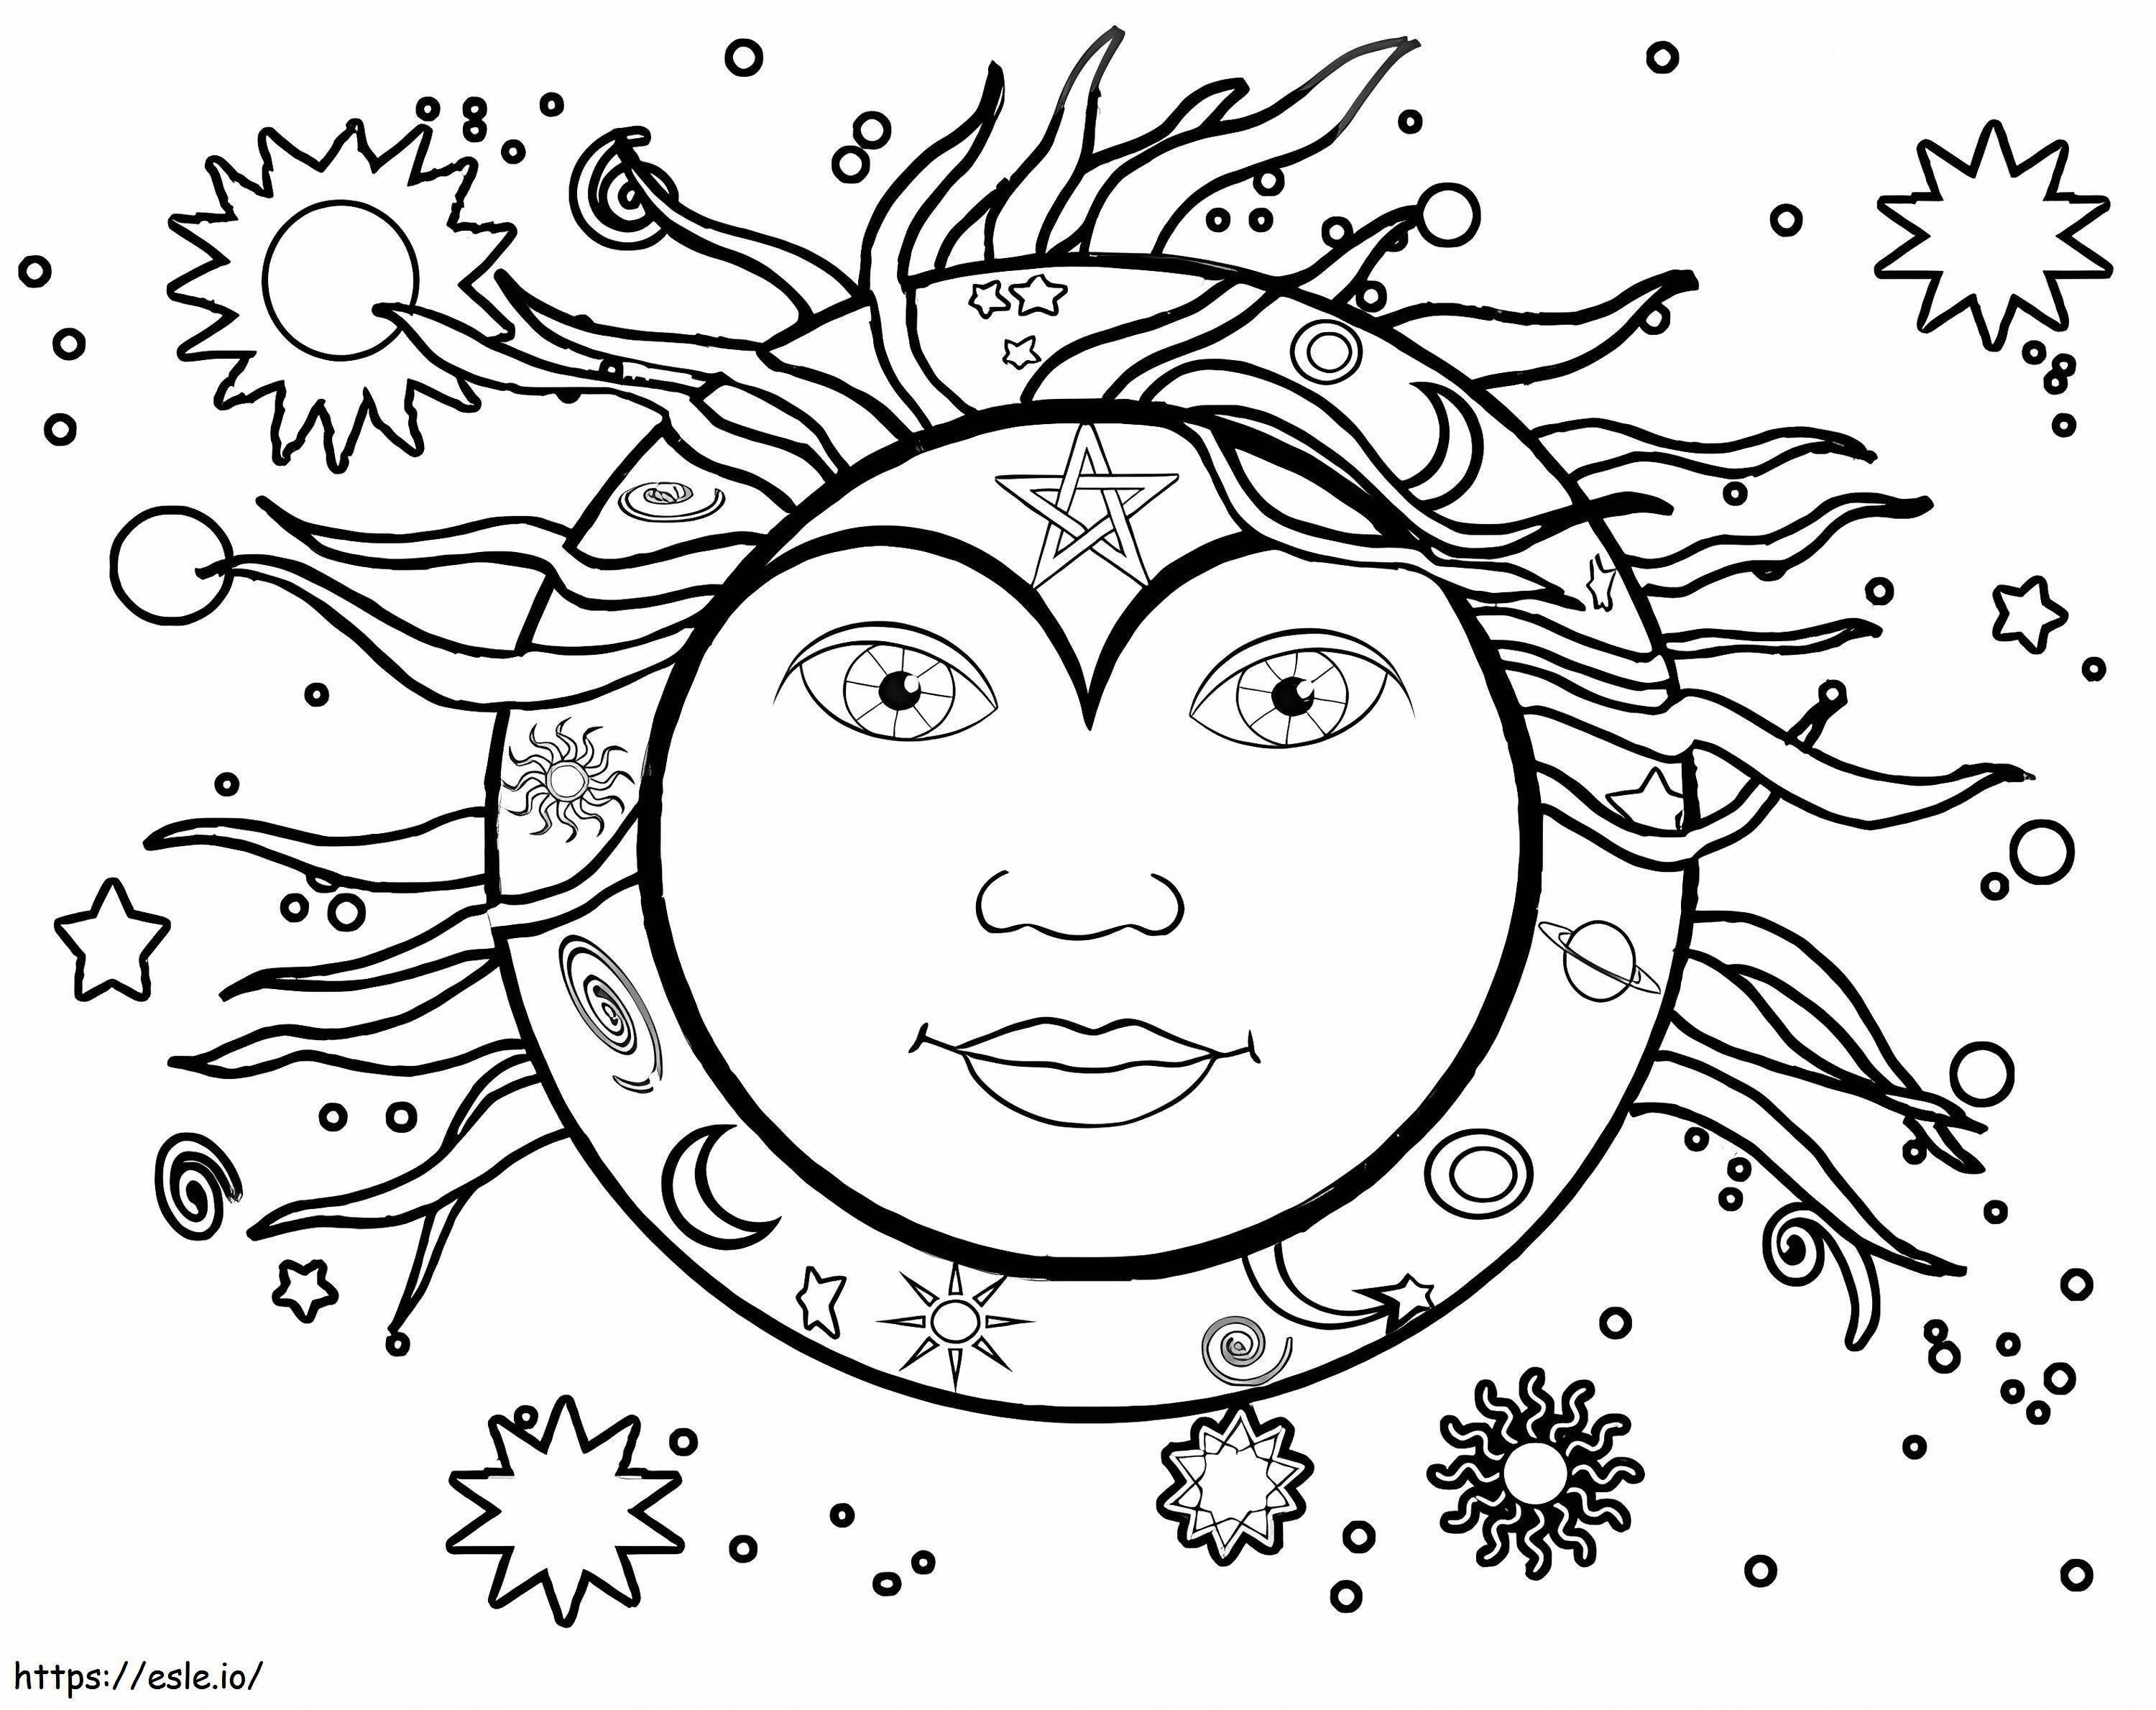 Aurinko ja kuu taide värityskuva